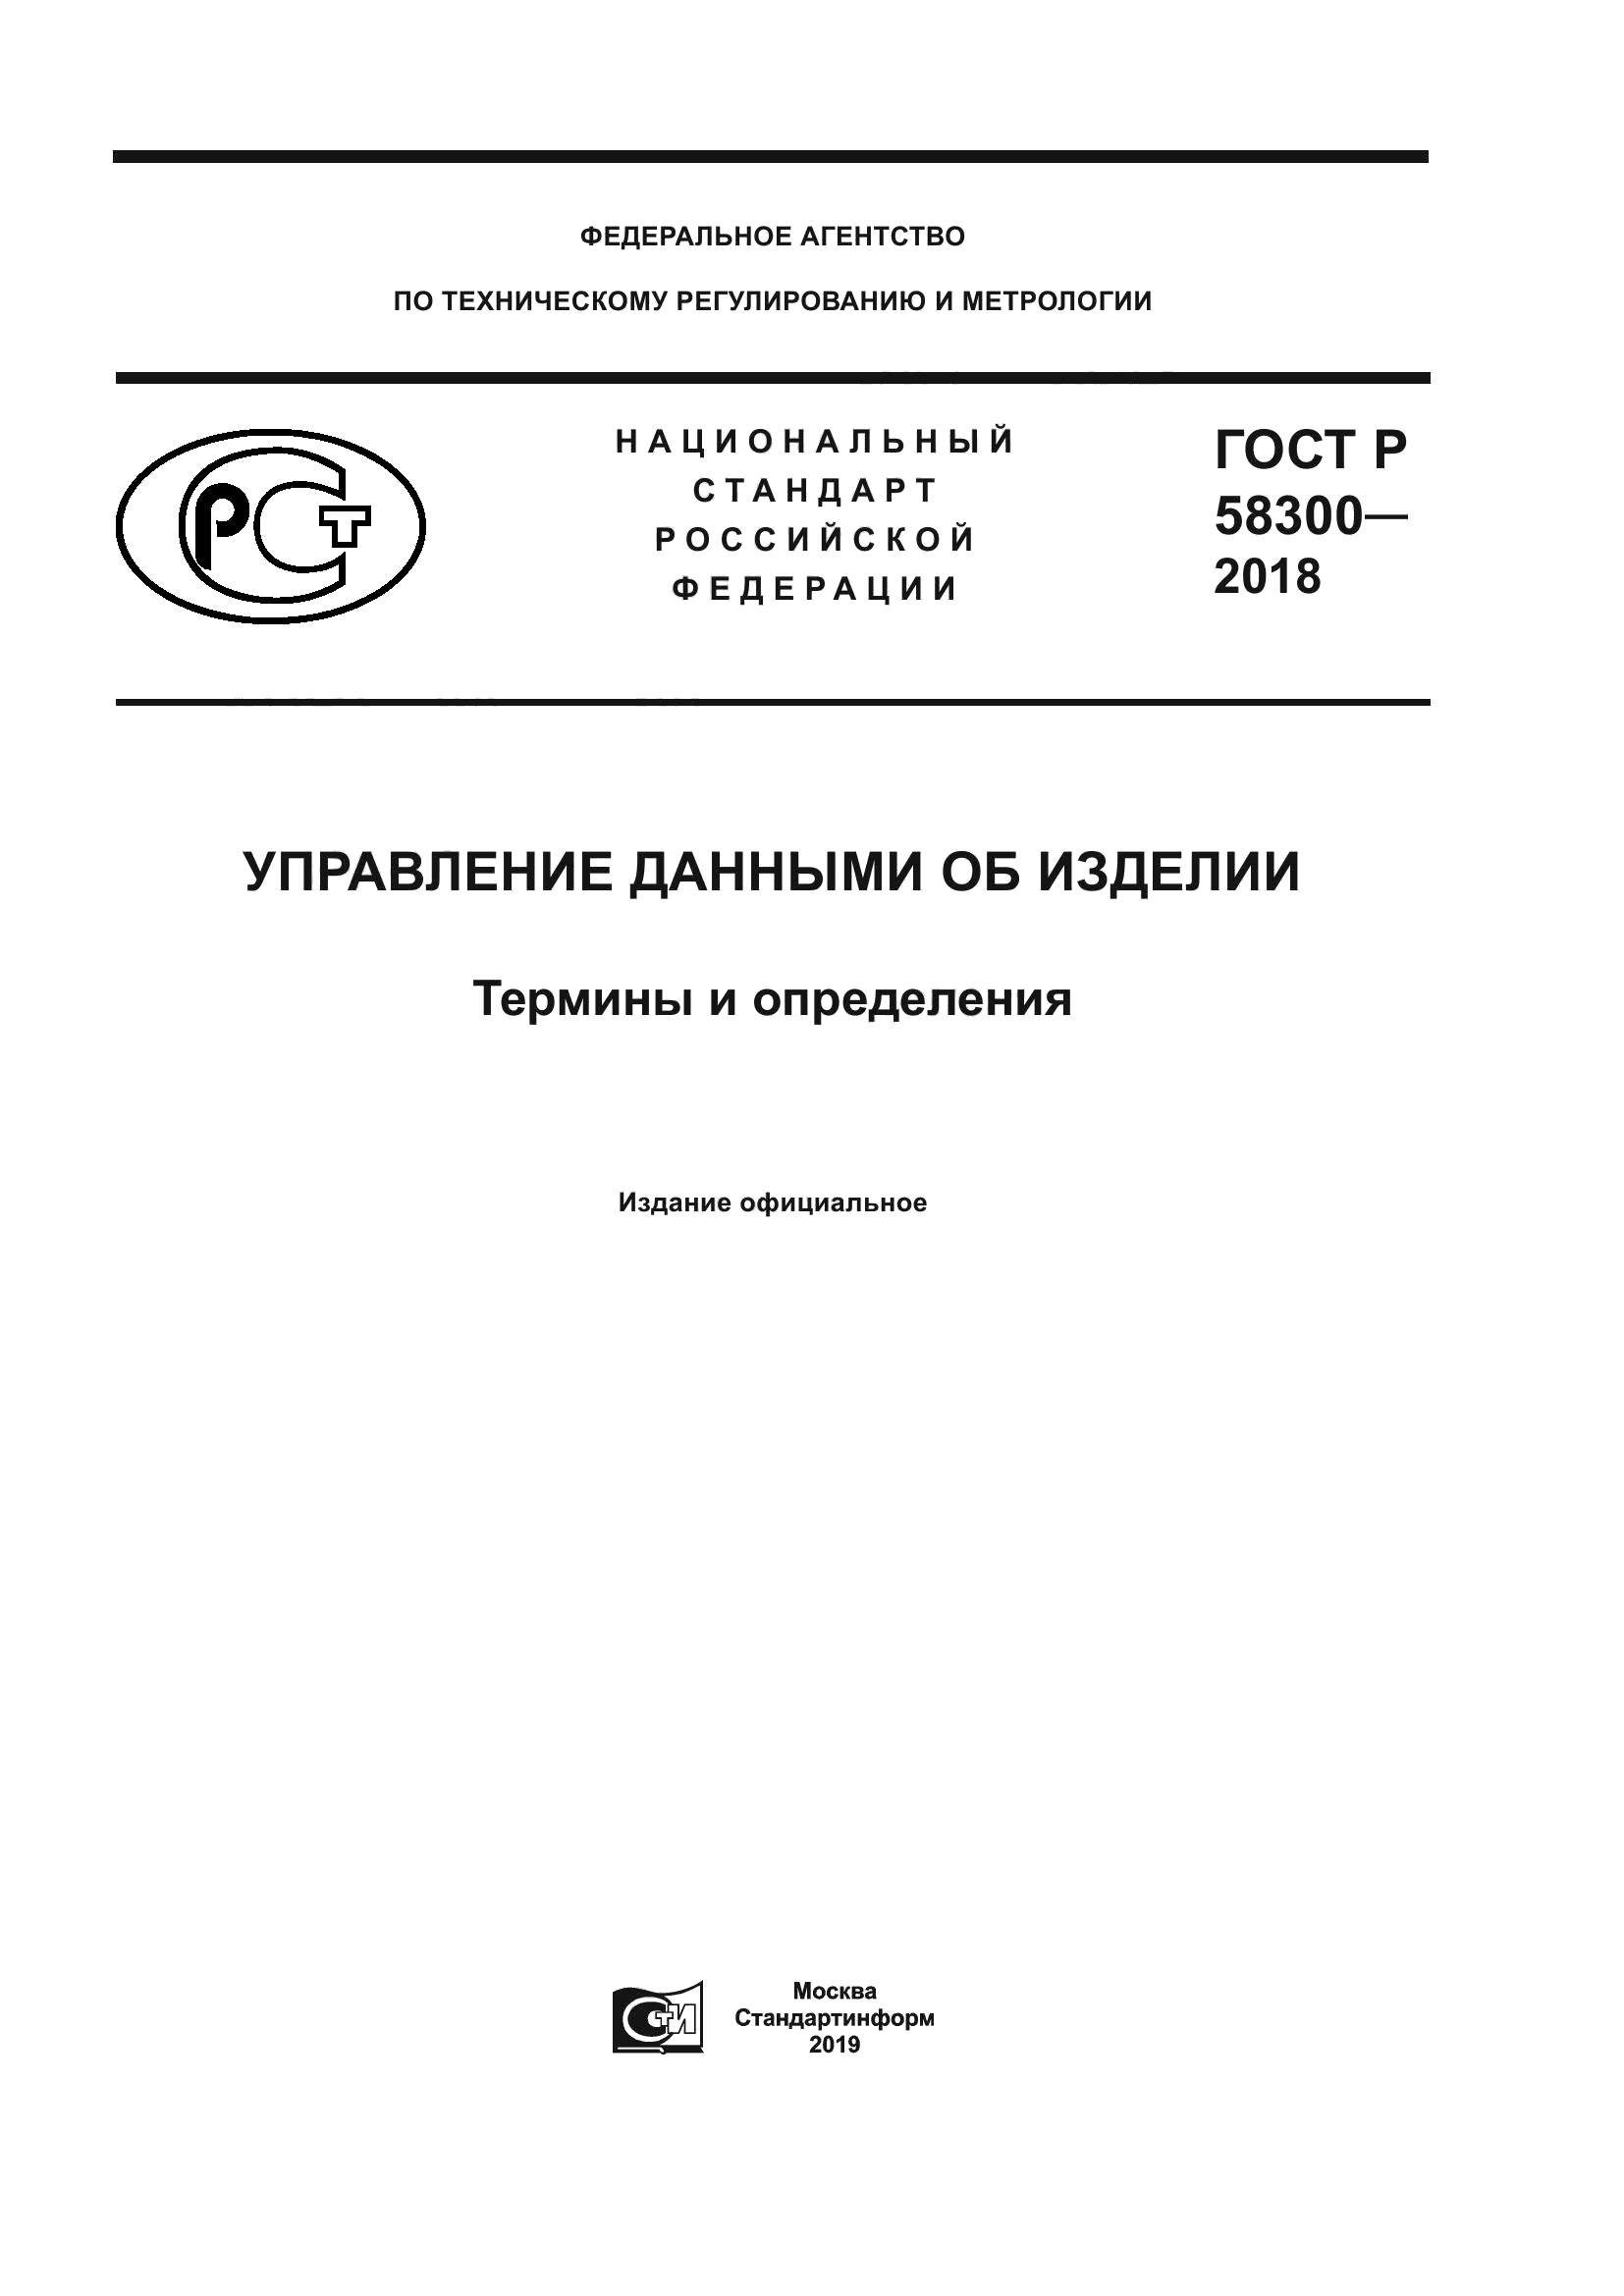 ГОСТ Р 58300-2018